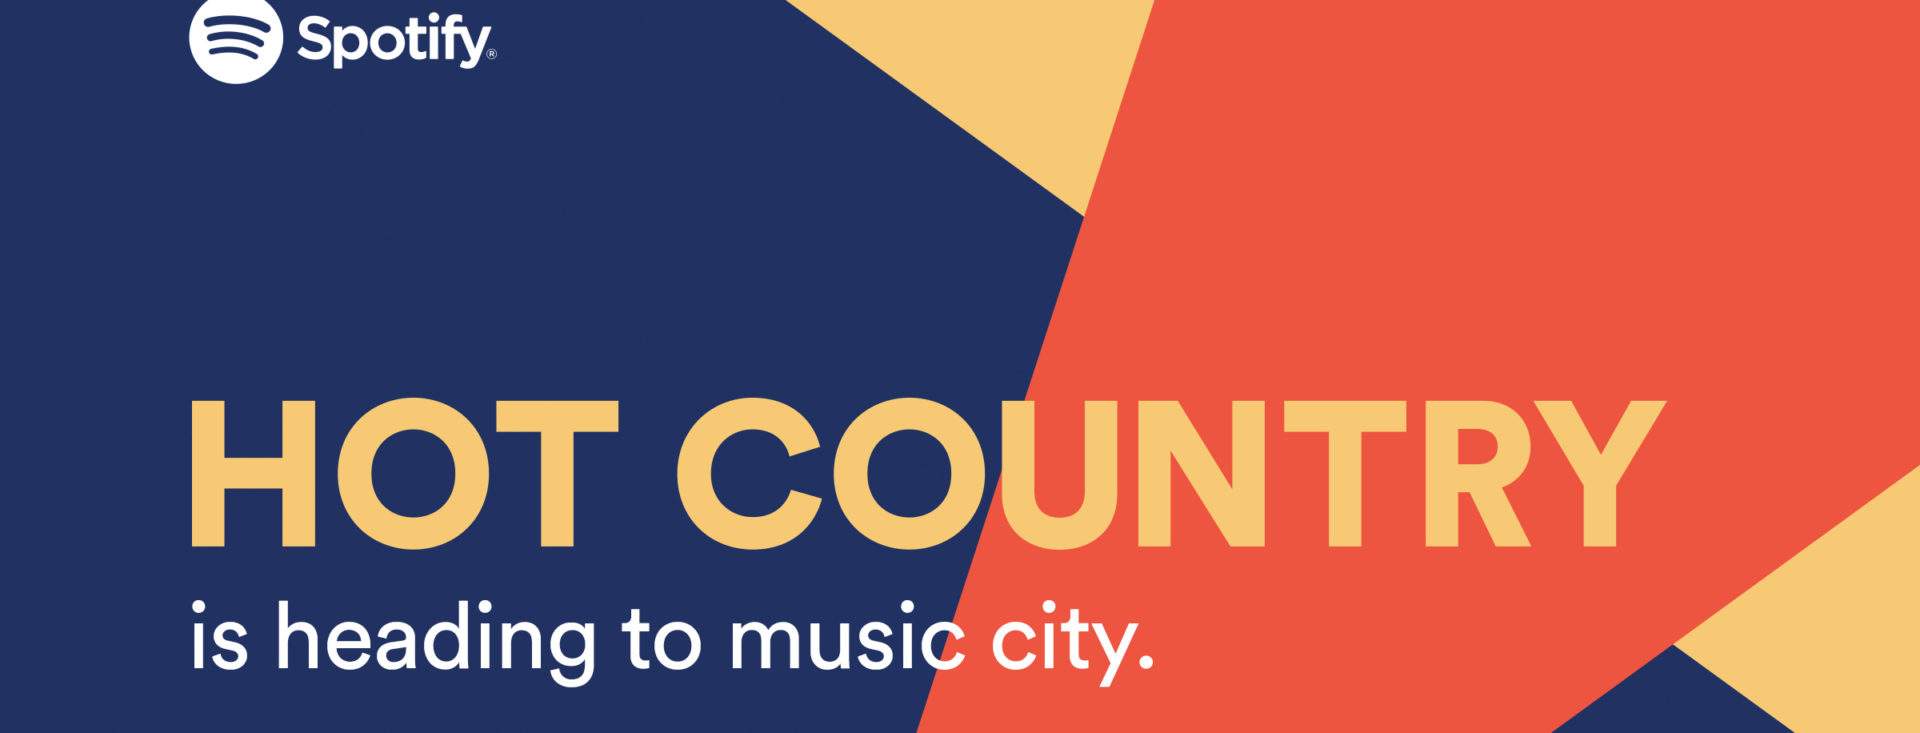 overtale påske fumle Spotify's Enhanced Hot Country Playlist Brings the Heat at Nashville's CMA  Fest — Spotify